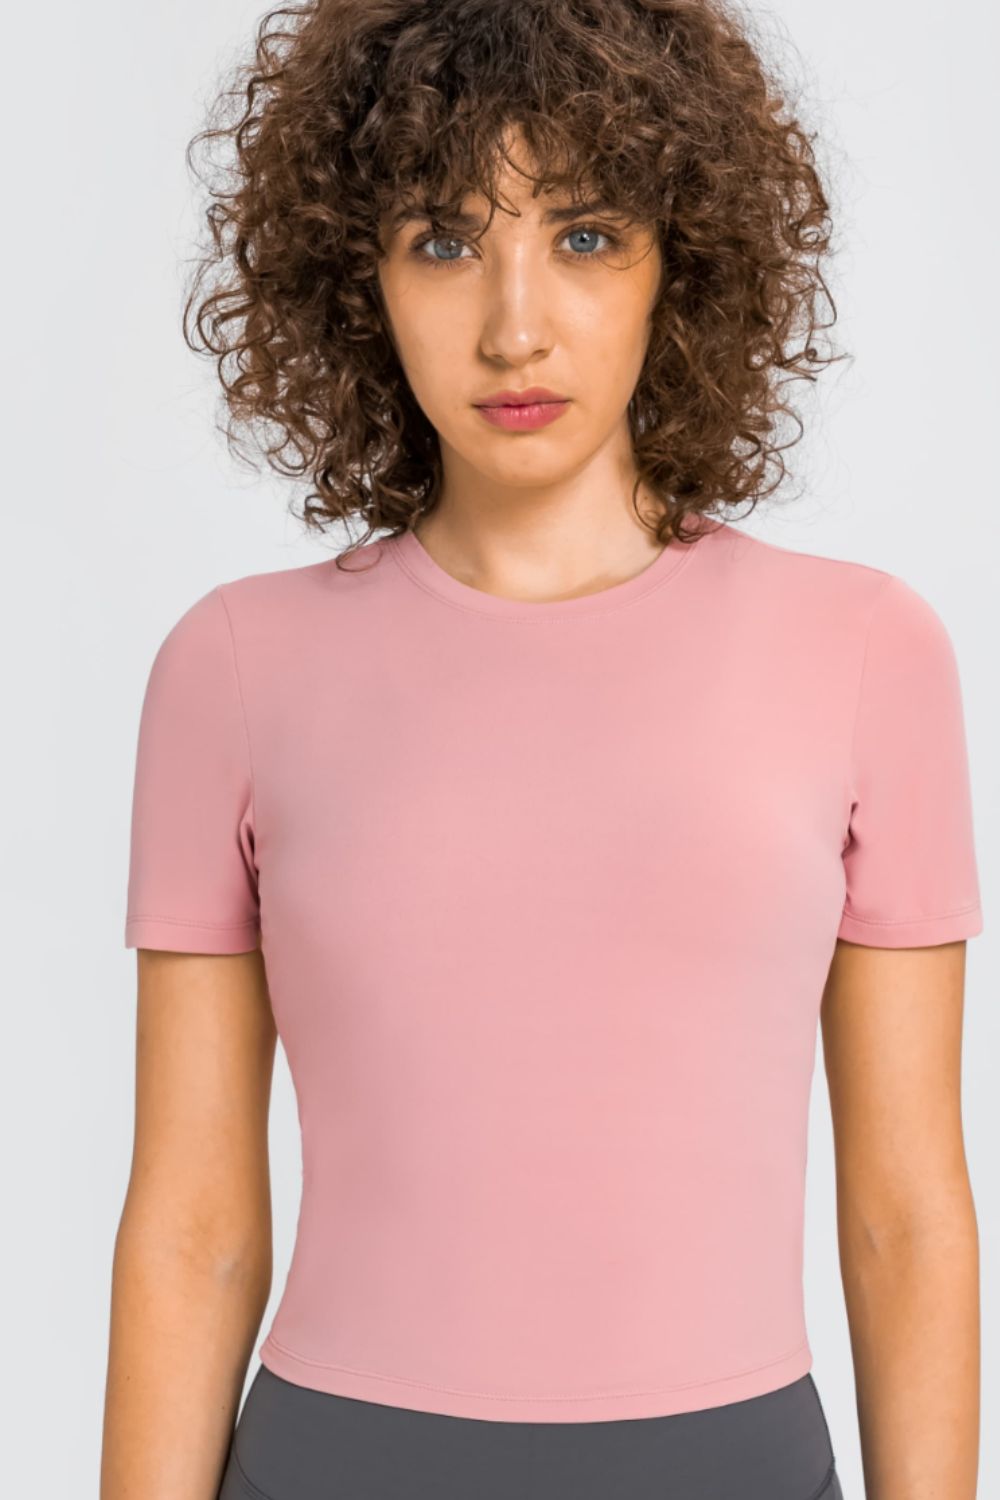 Round Neck Short Sleeve Yoga Tee - Pink / 4 Apparel & Accessories Wynter 4 All Seasons